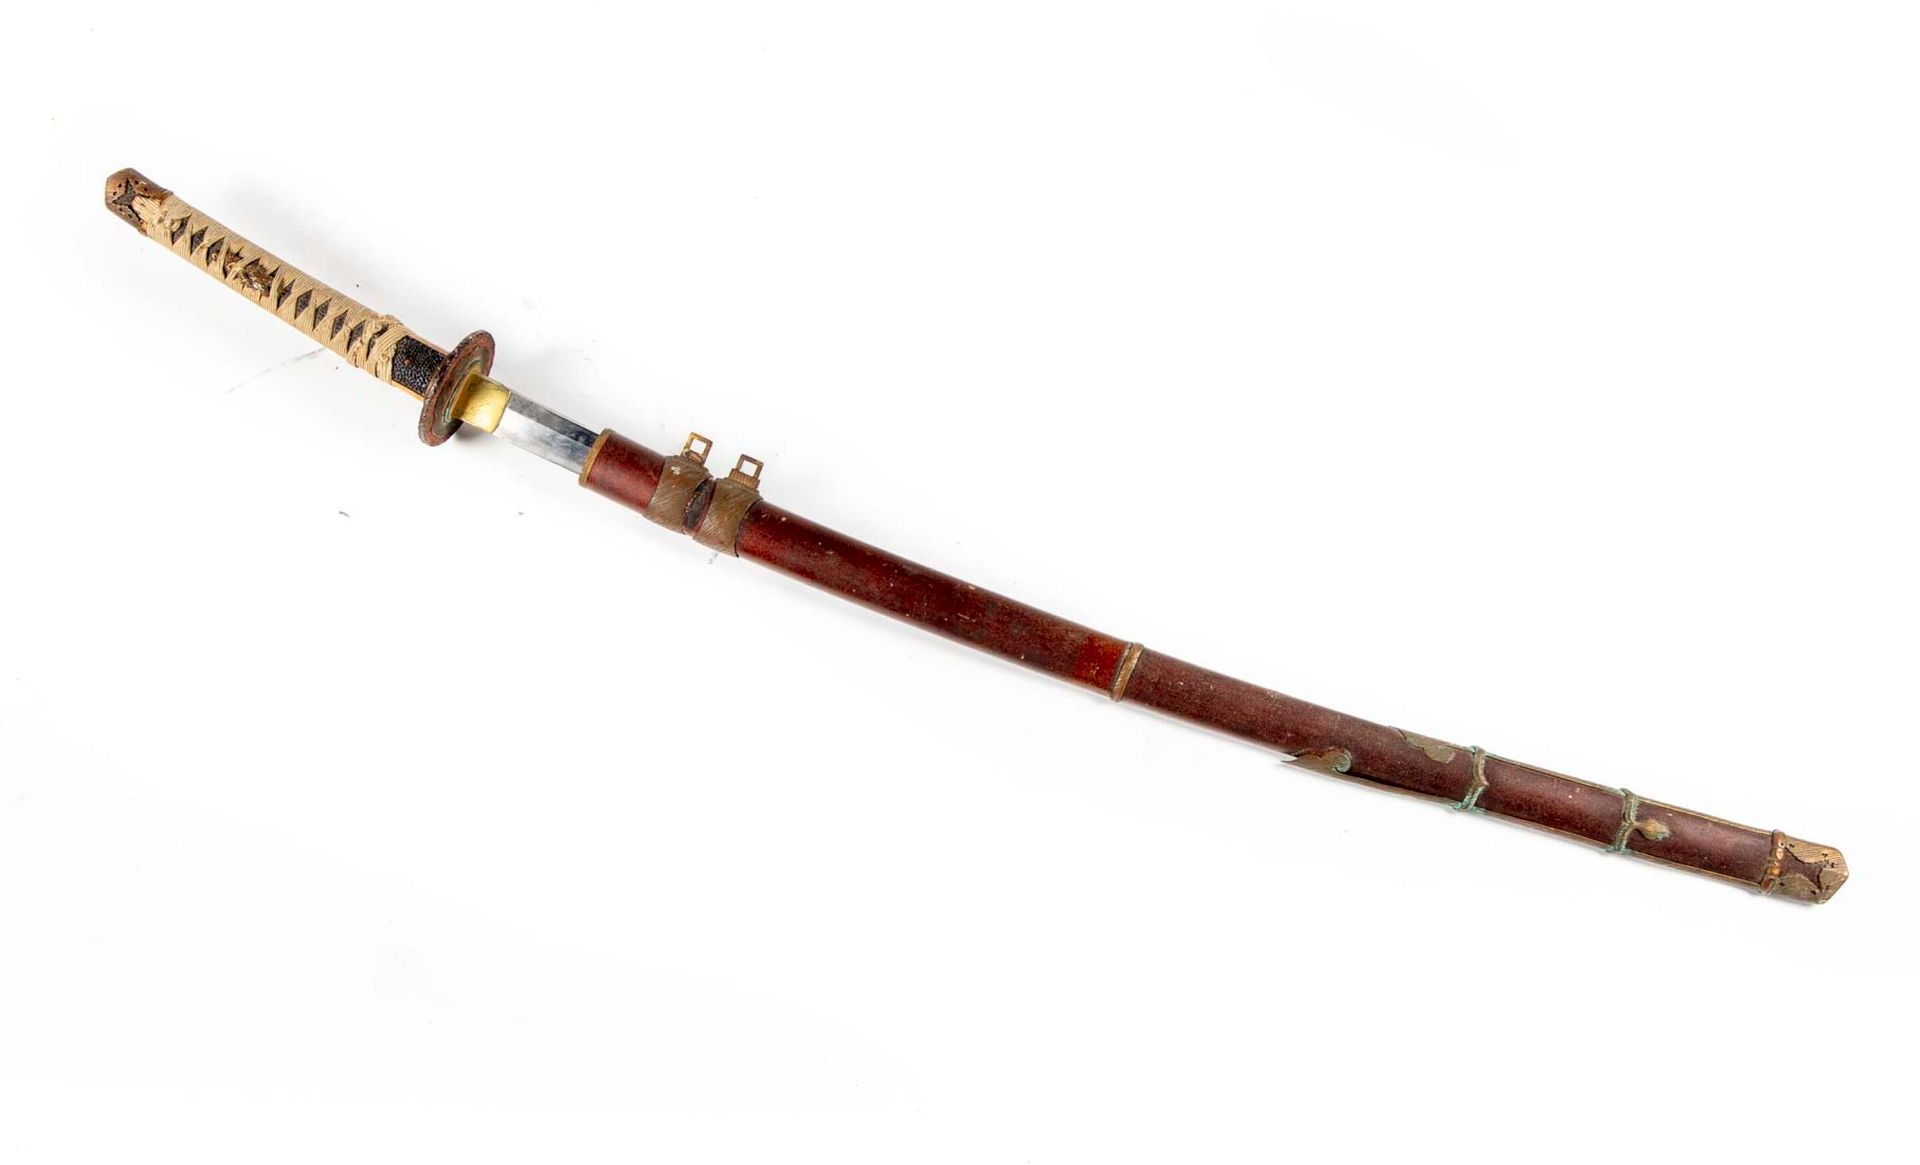 JAPON JAPAN

Katana type sword with slightly curved steel blade

Iron tsuba (oxi&hellip;